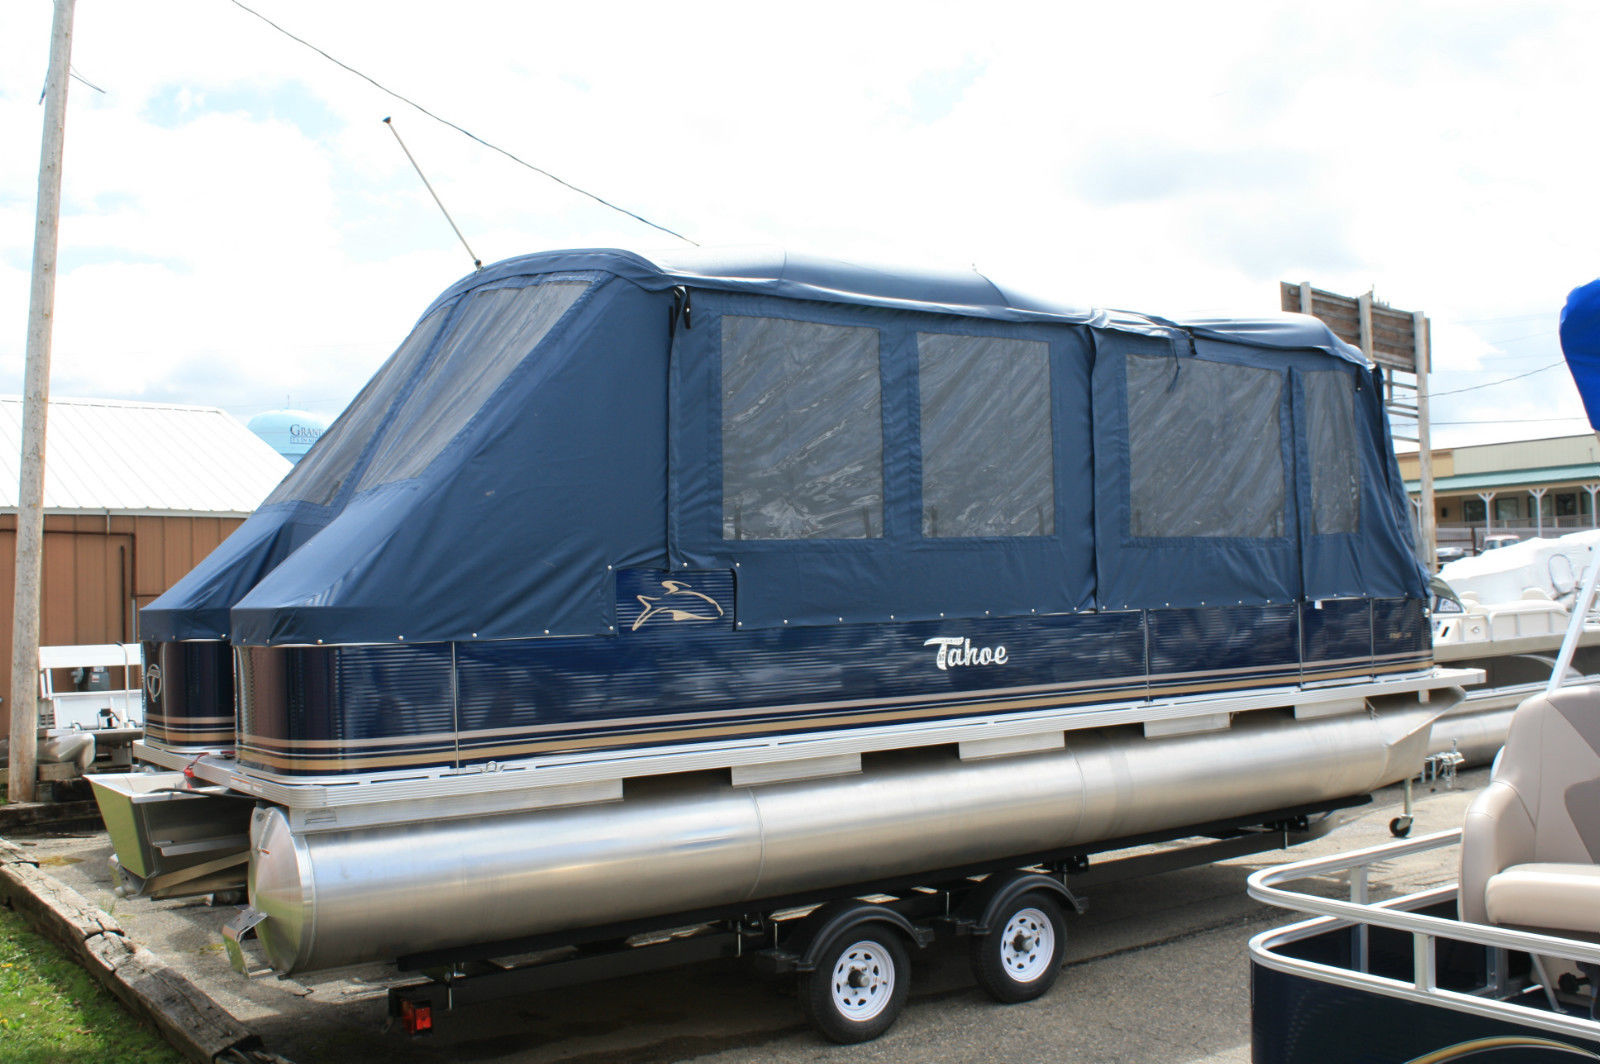 New 24 Ft High End Pontoon Boat With Camper Enclosure boat 